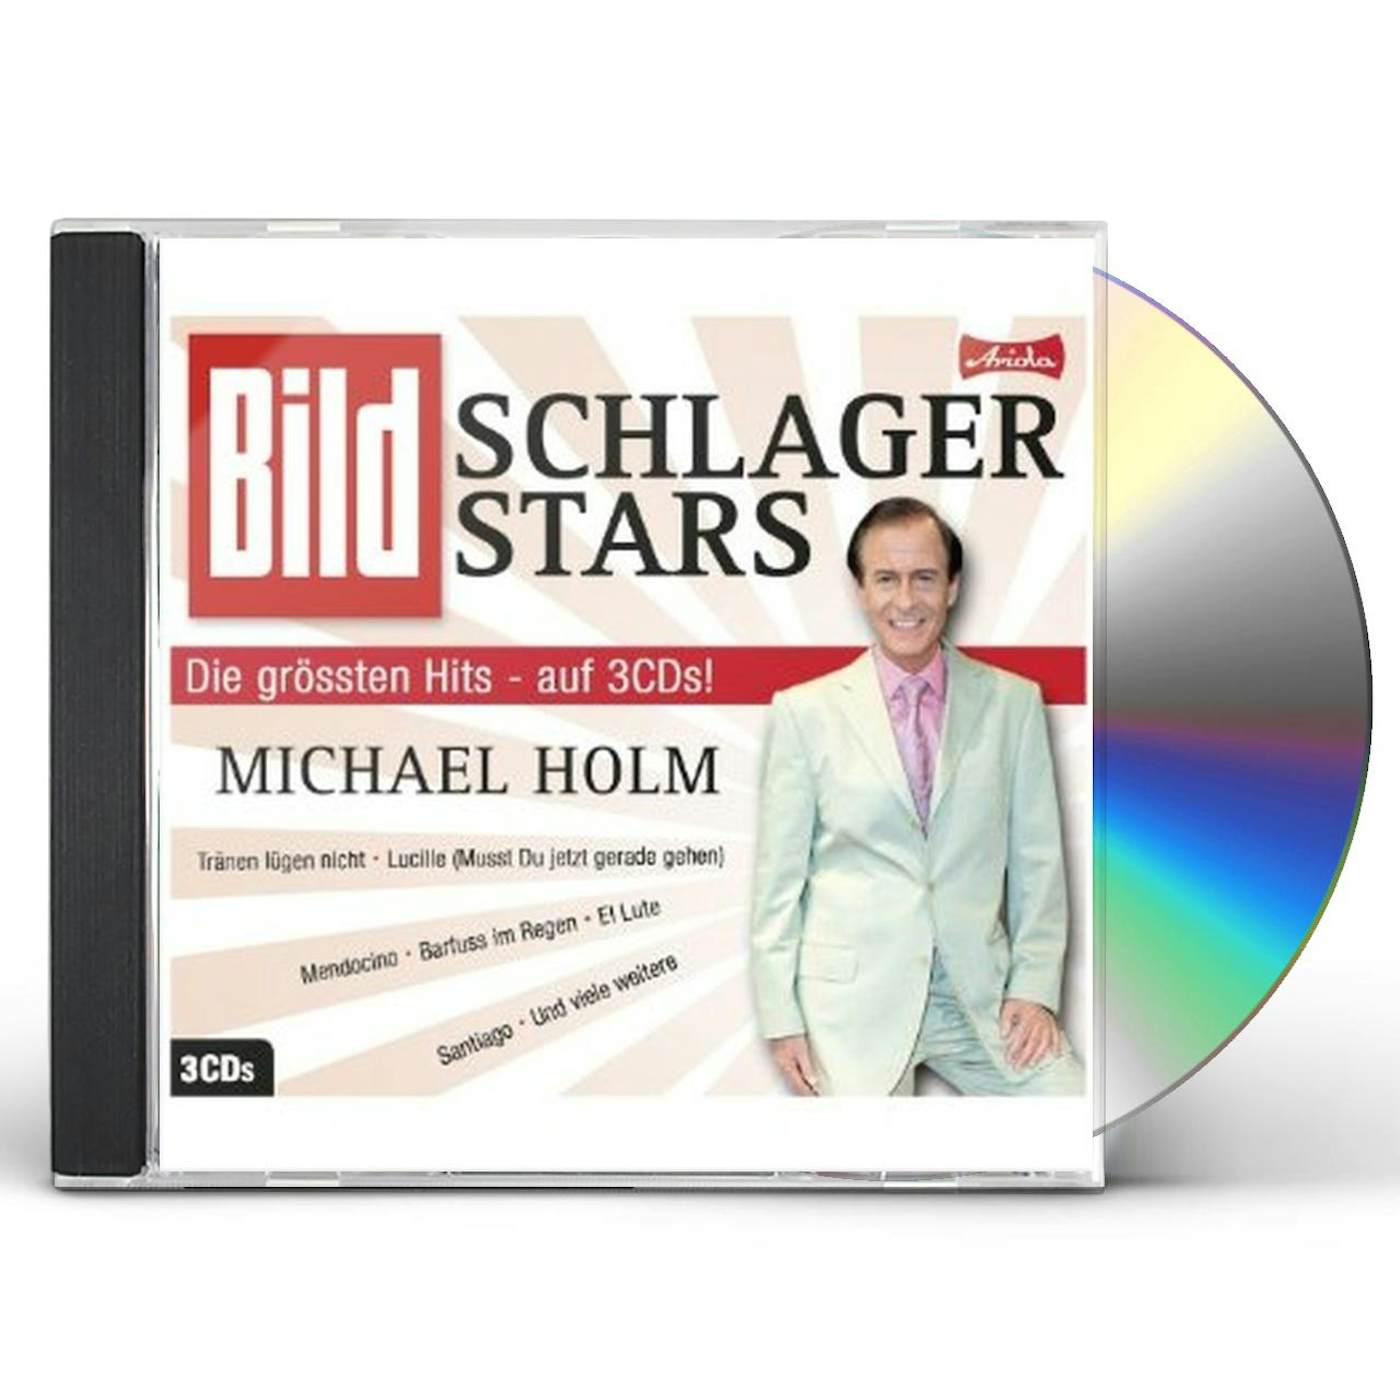 Michael Holm BILD SCHLAGER STARS CD